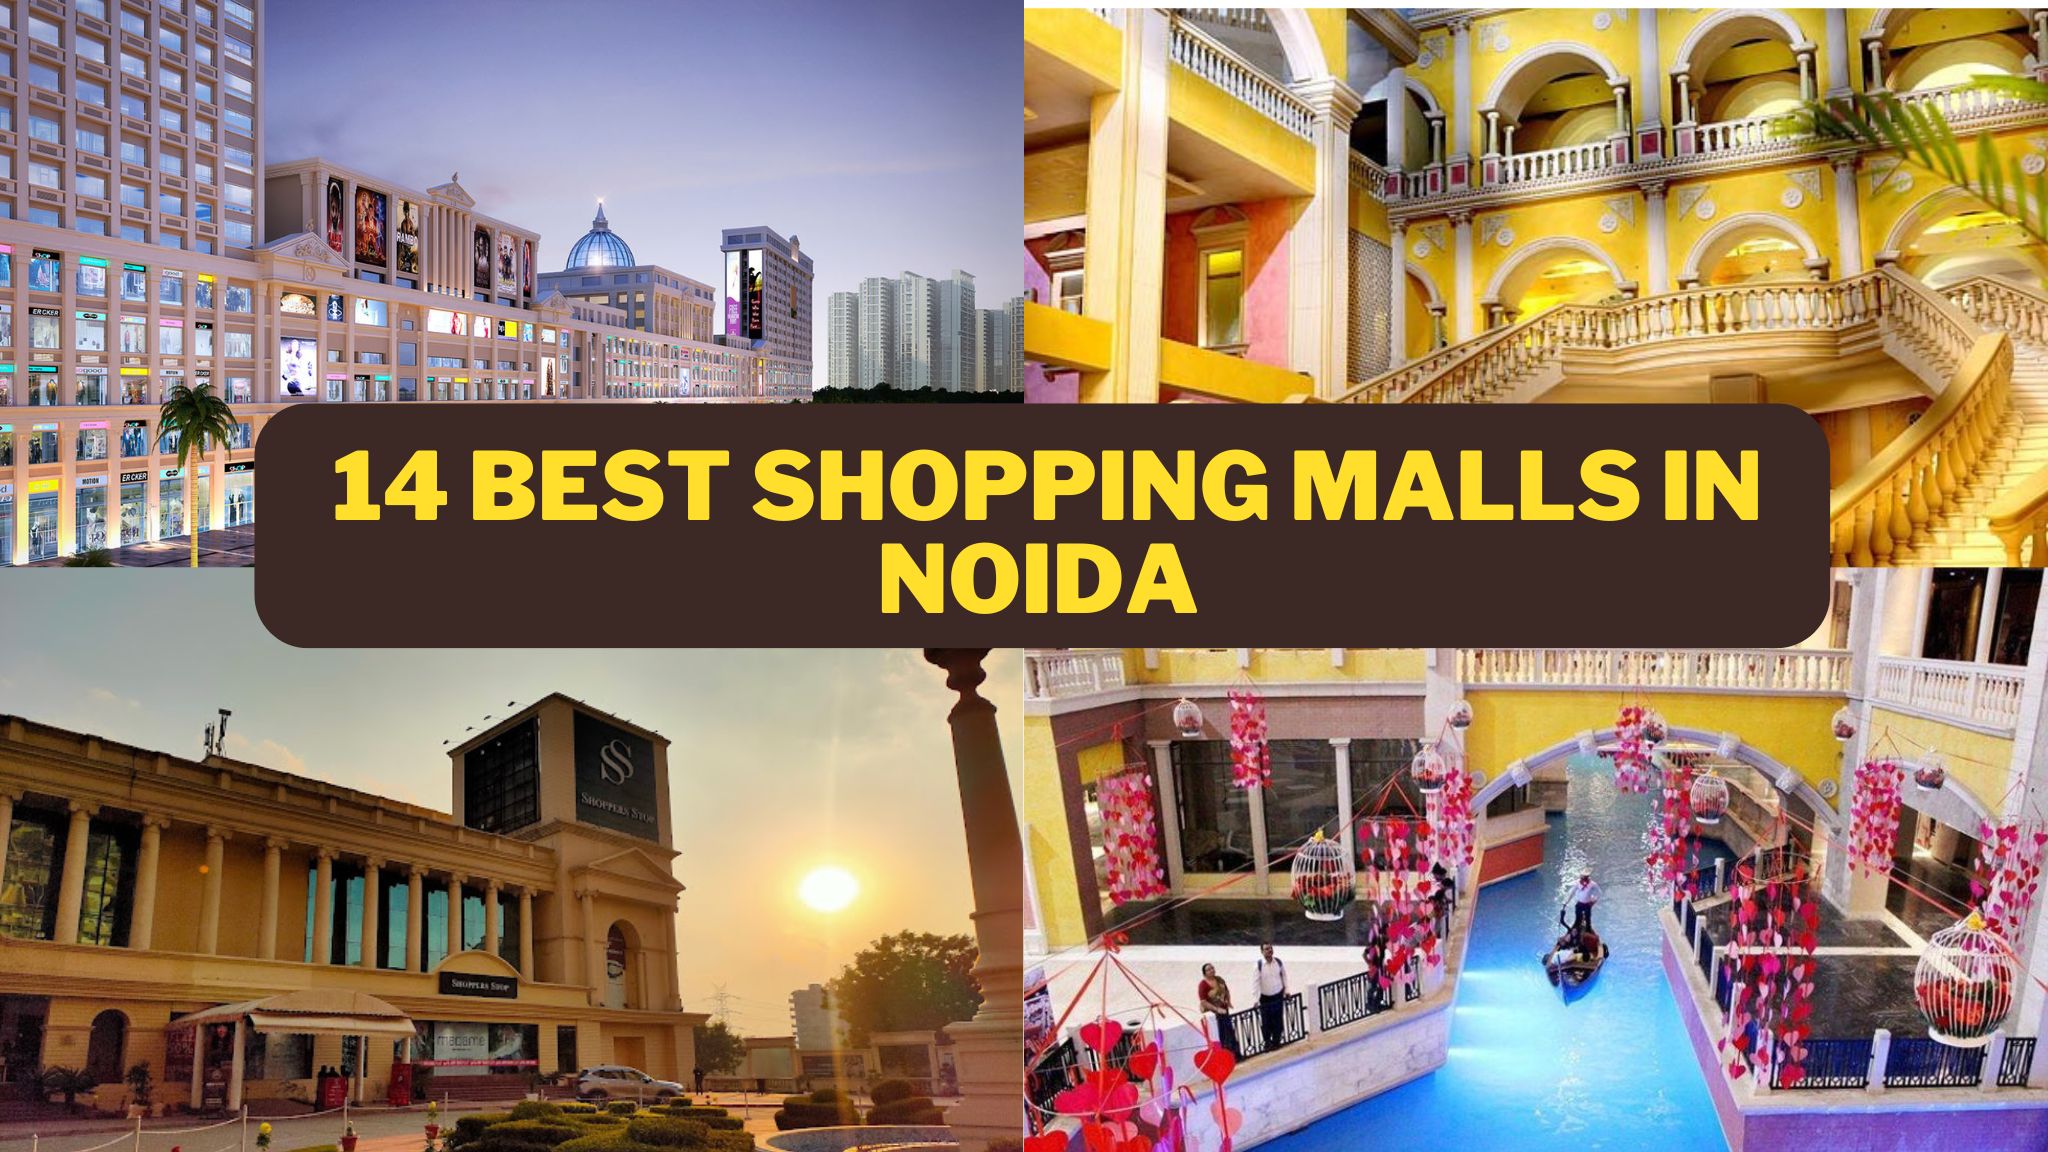 14 Best Shopping Malls in Noida: A Comprehensive List